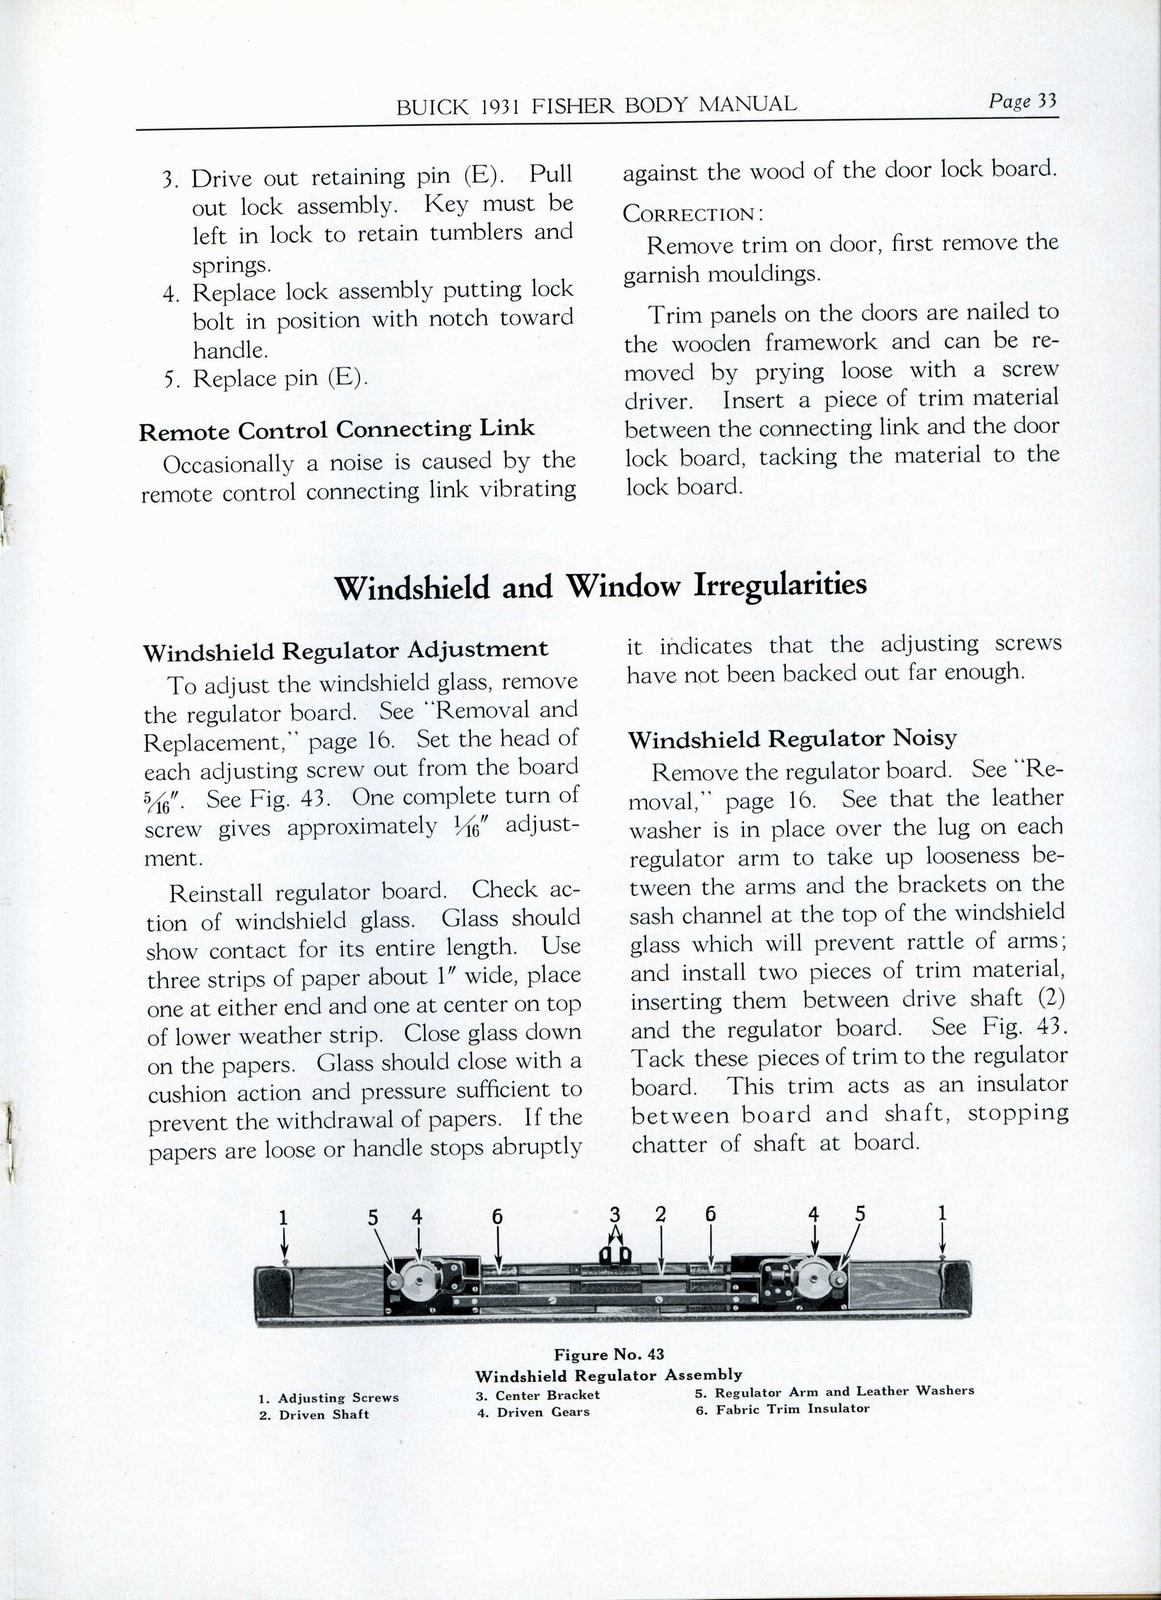 n_1931 Buick Fisher Body Manual-33.jpg